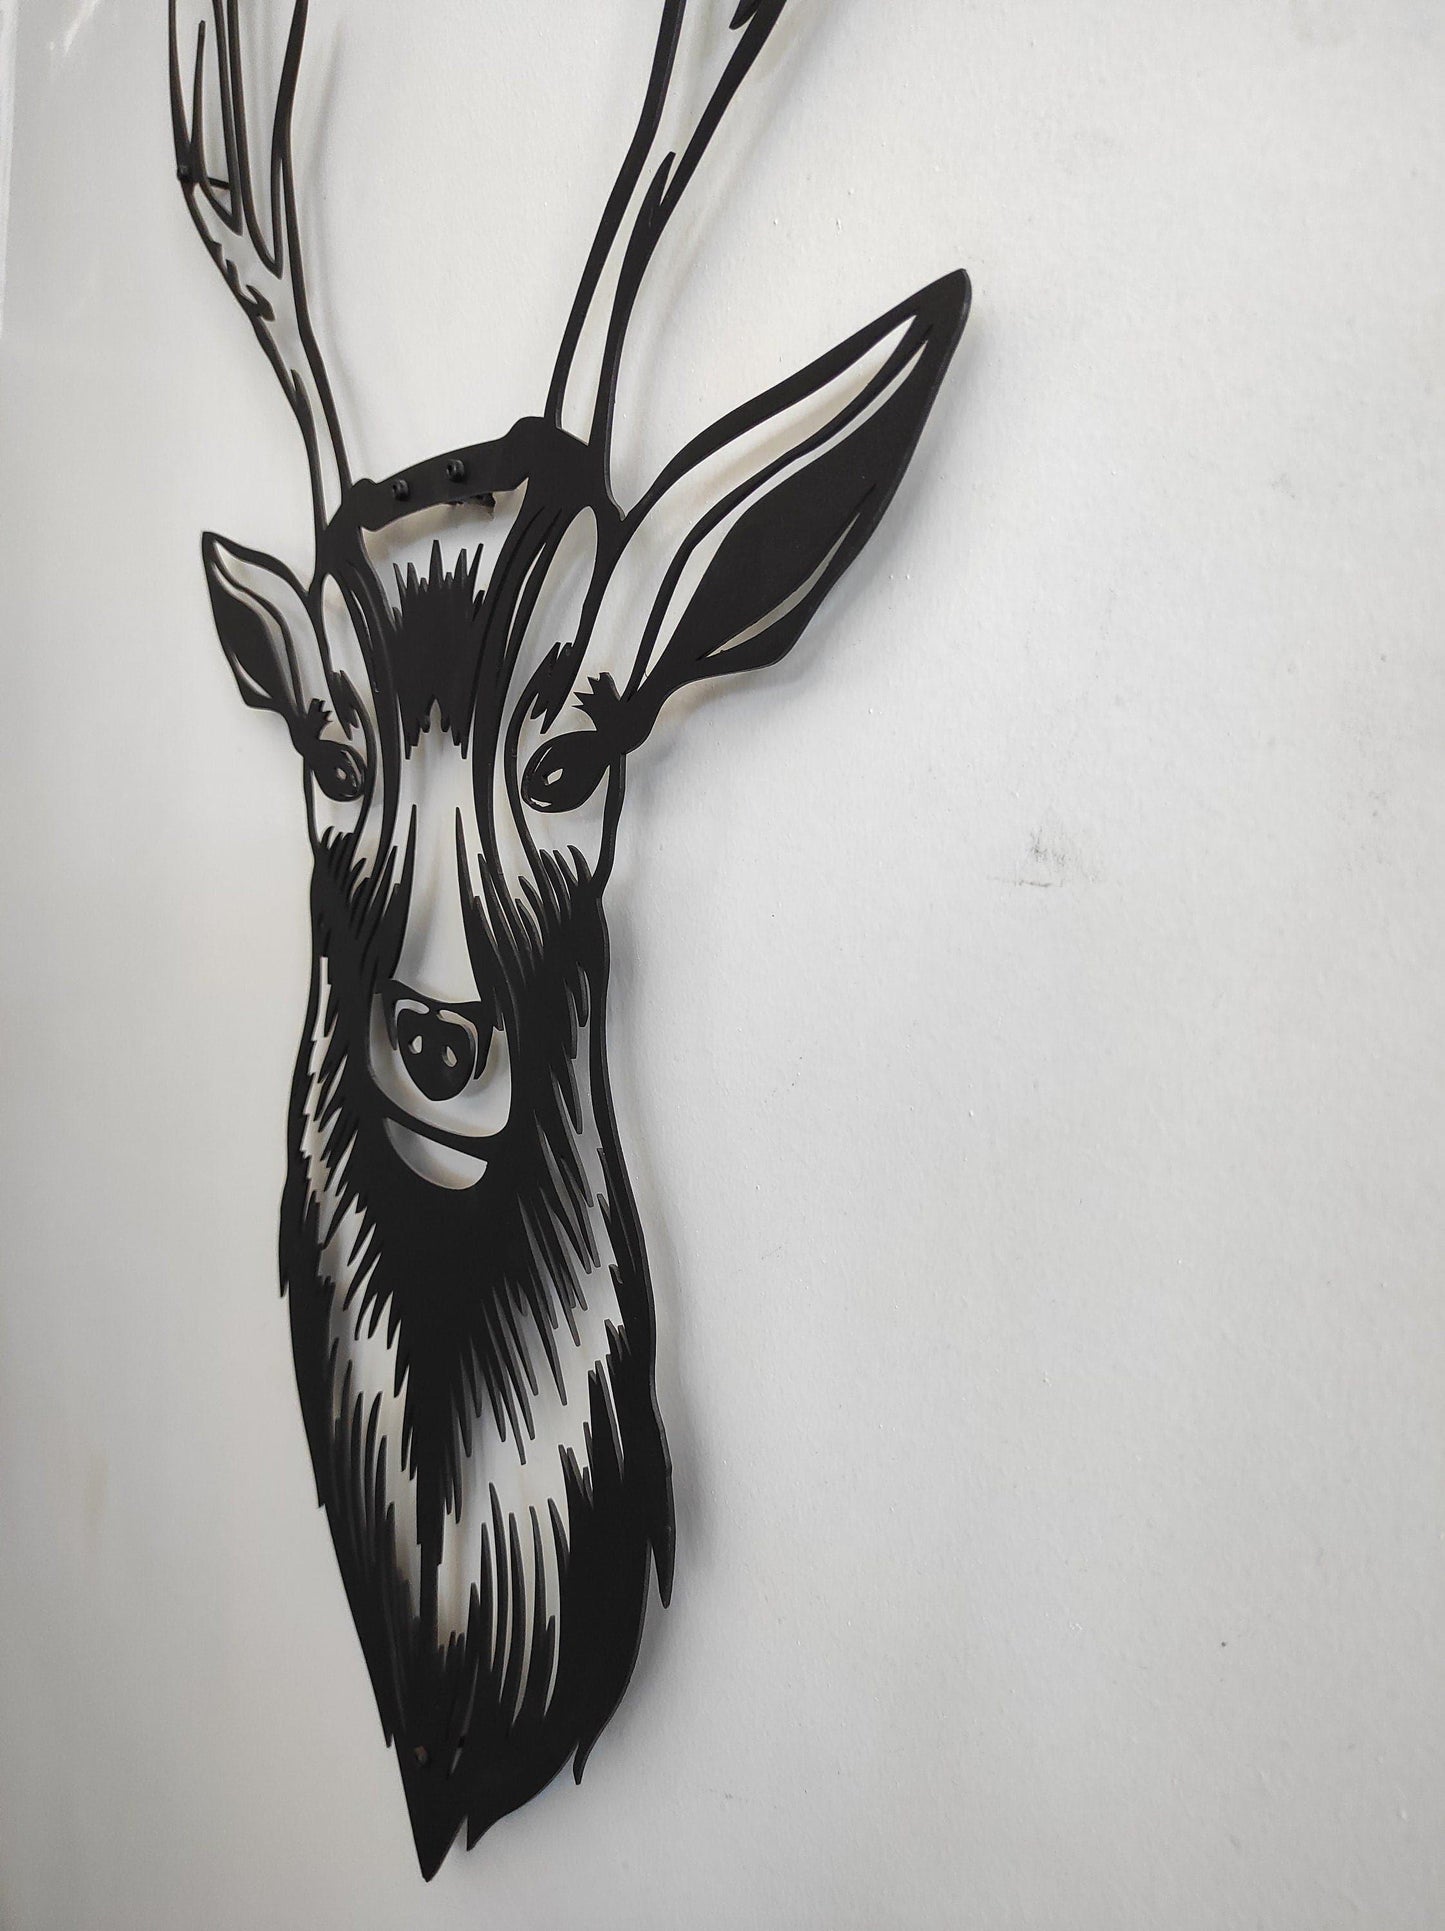 Geometric Deer Head with Antlers Metal Wall Art - MAIA HOMES